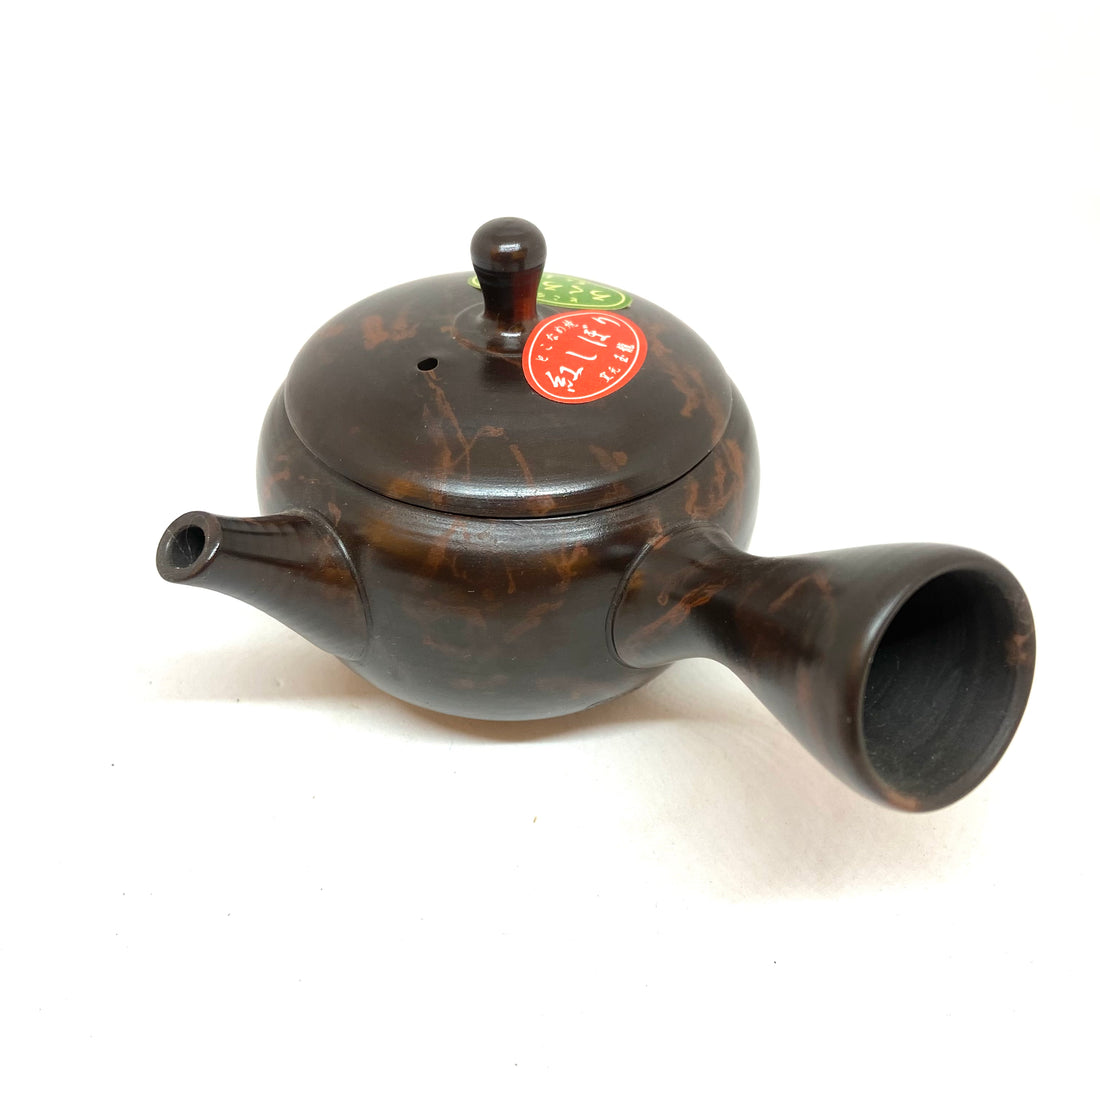 Kyusu Japanese Teapot - Benishibori Small- 120ml  - #1150